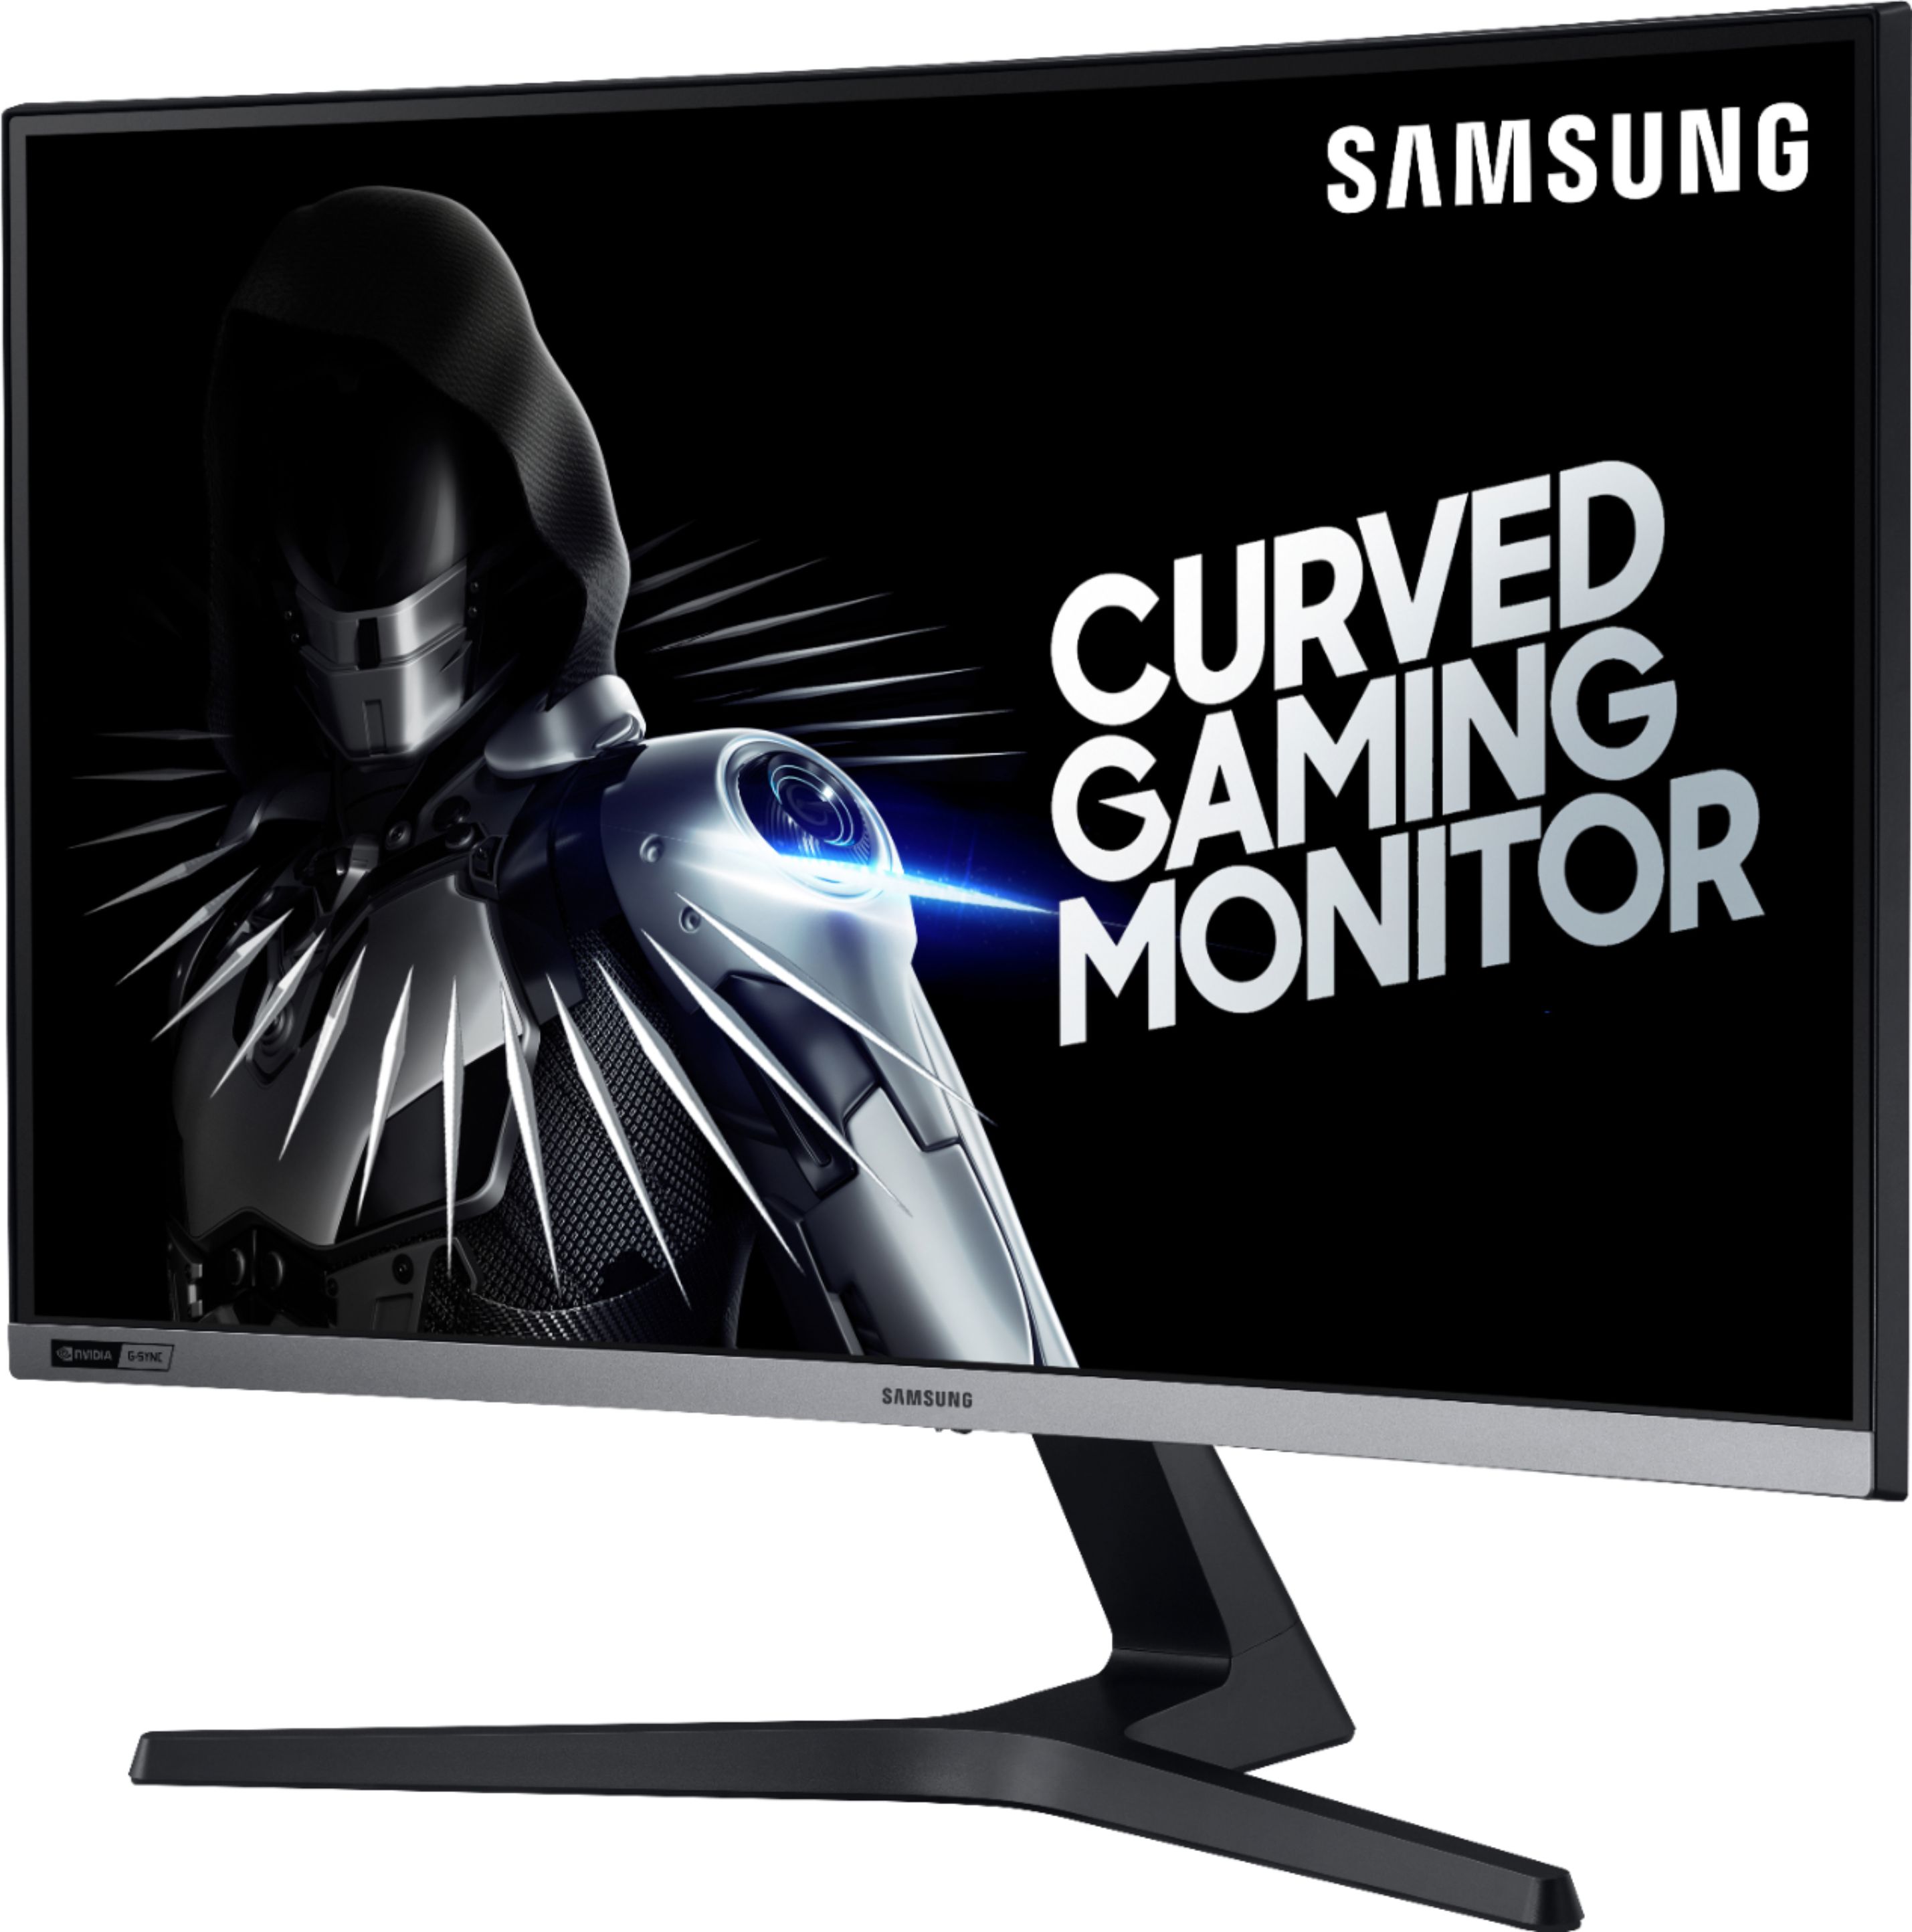 Samsung - CRG5 Series 27" LED Curved FHD G-Sync Monitor - Dark Blue/Gray